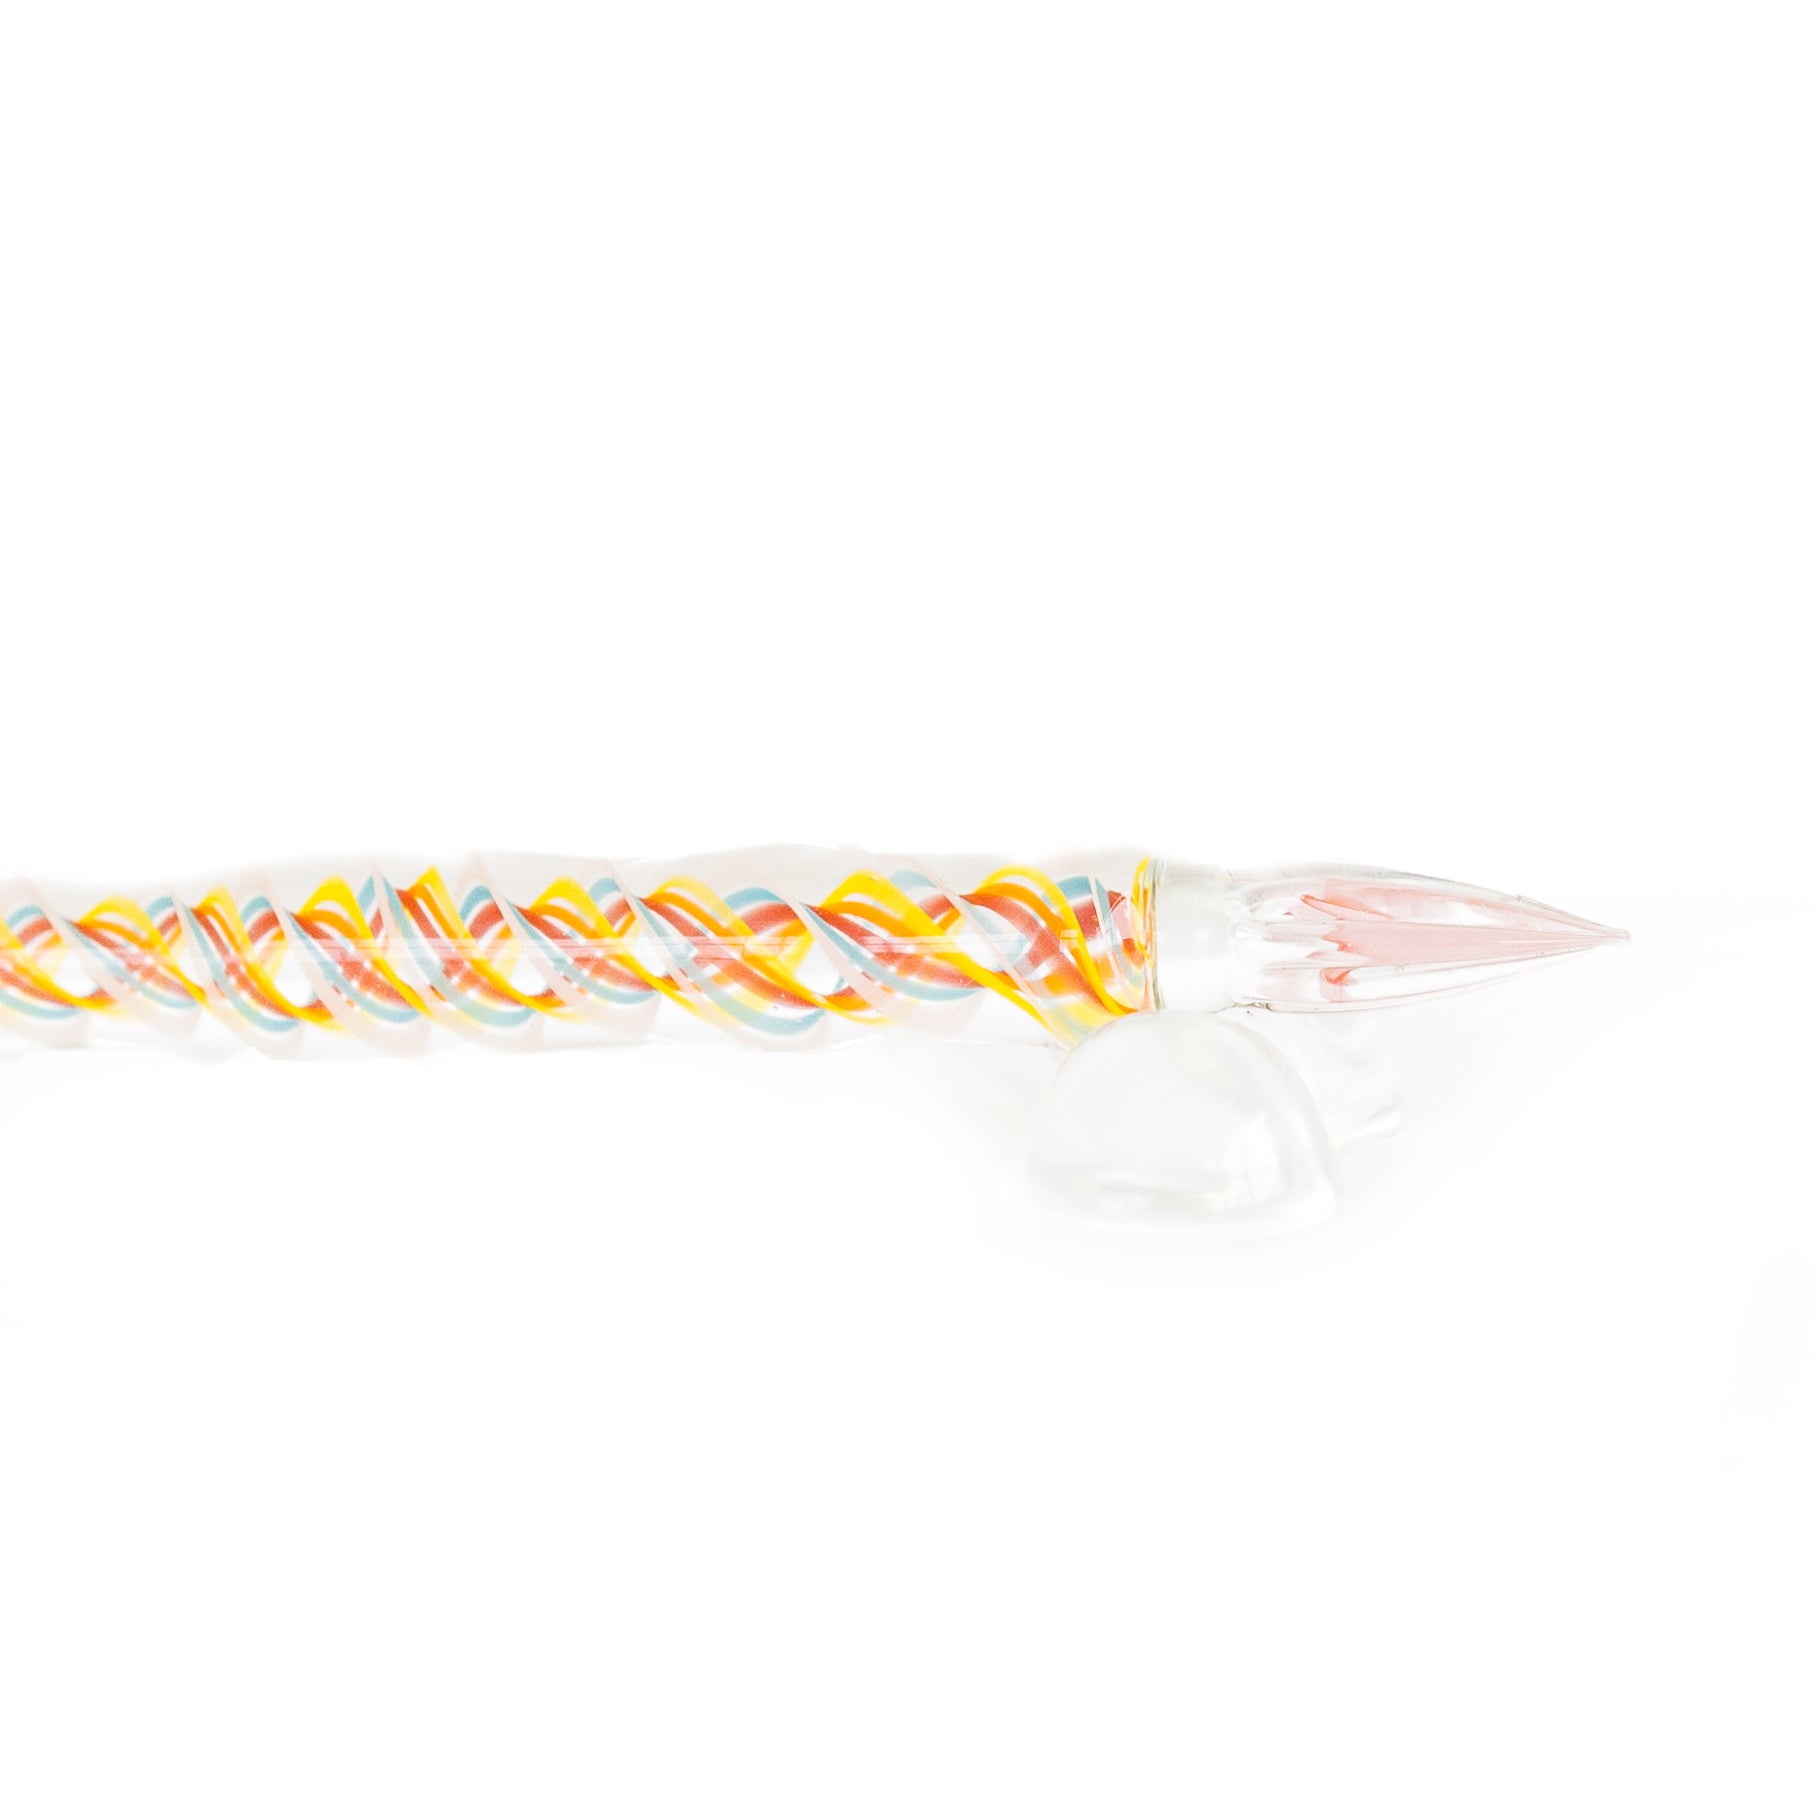 Rainbow Spiral Glass Dip Pen Kit